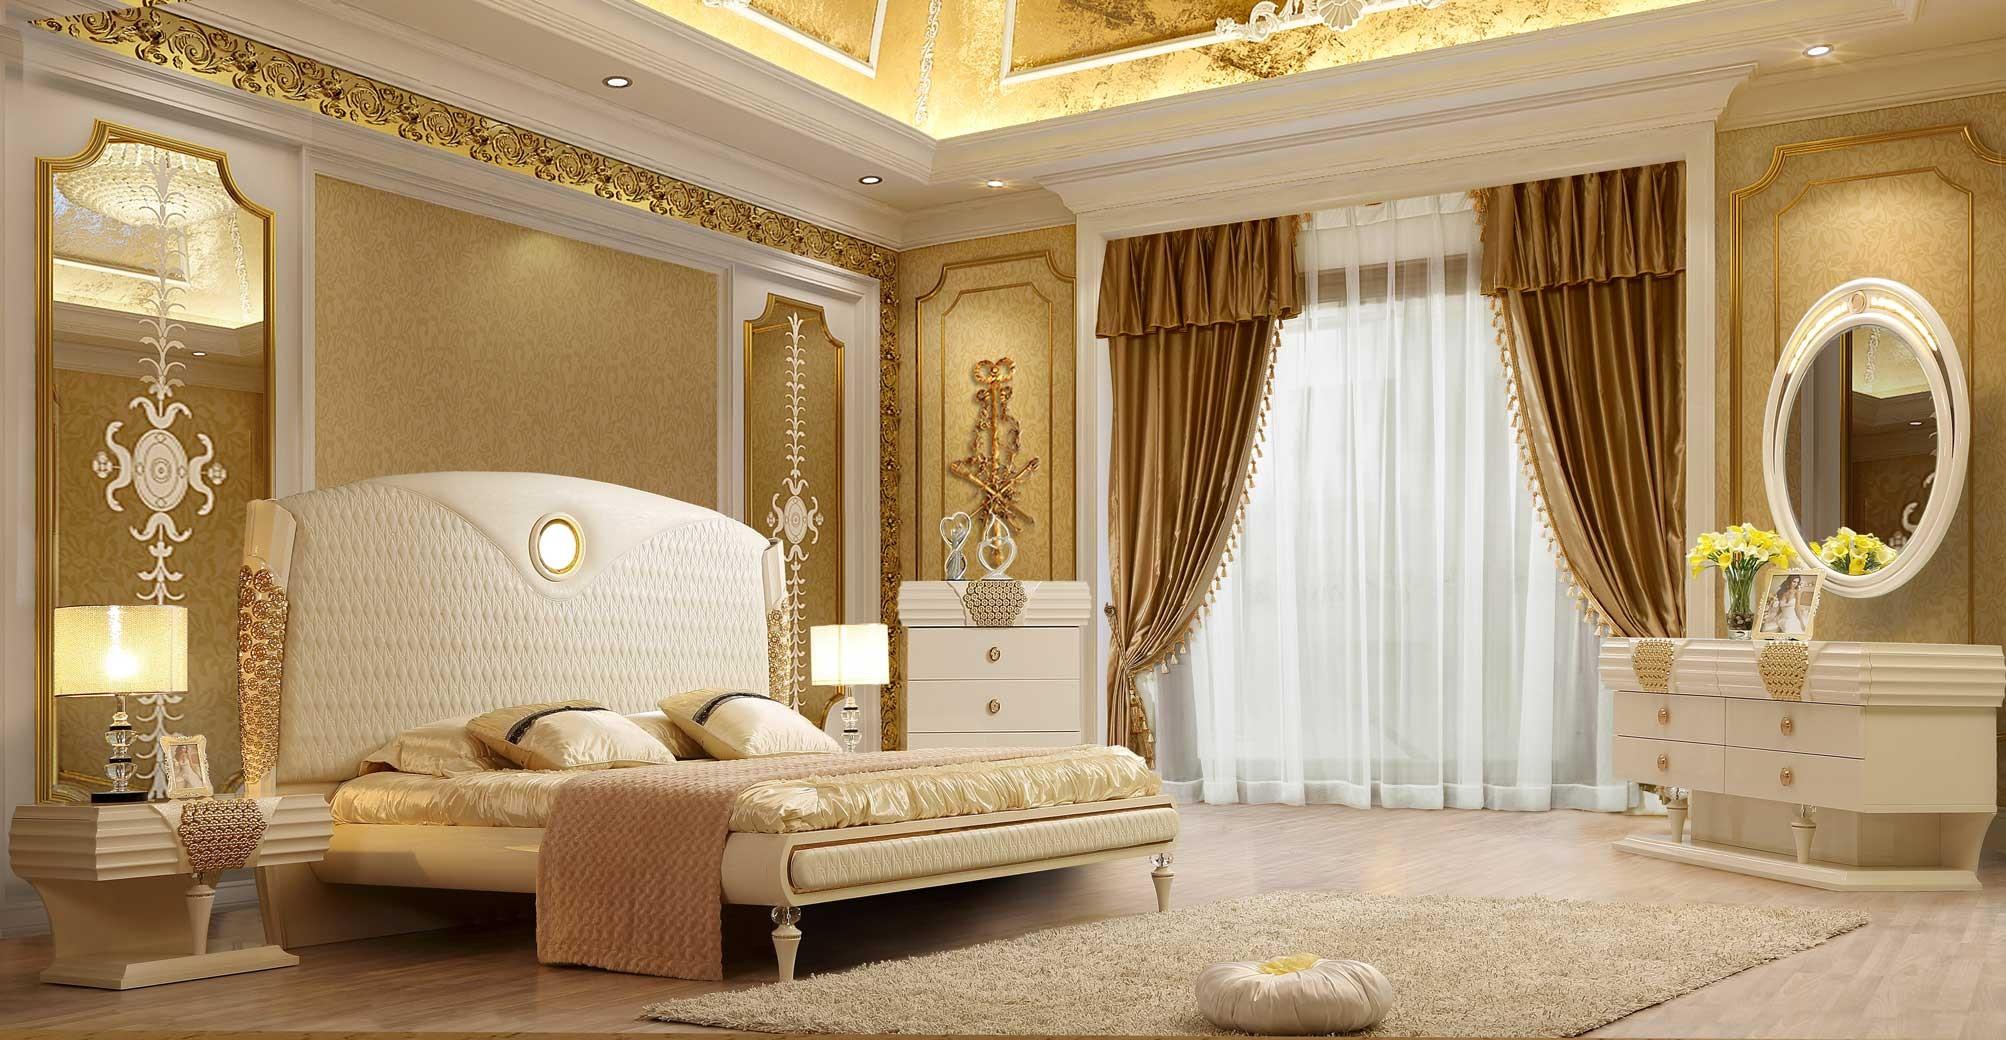 

    
Luxury King Bedroom Set 5 Pcs Cream Leather Contemporary Homey Design HD-901
